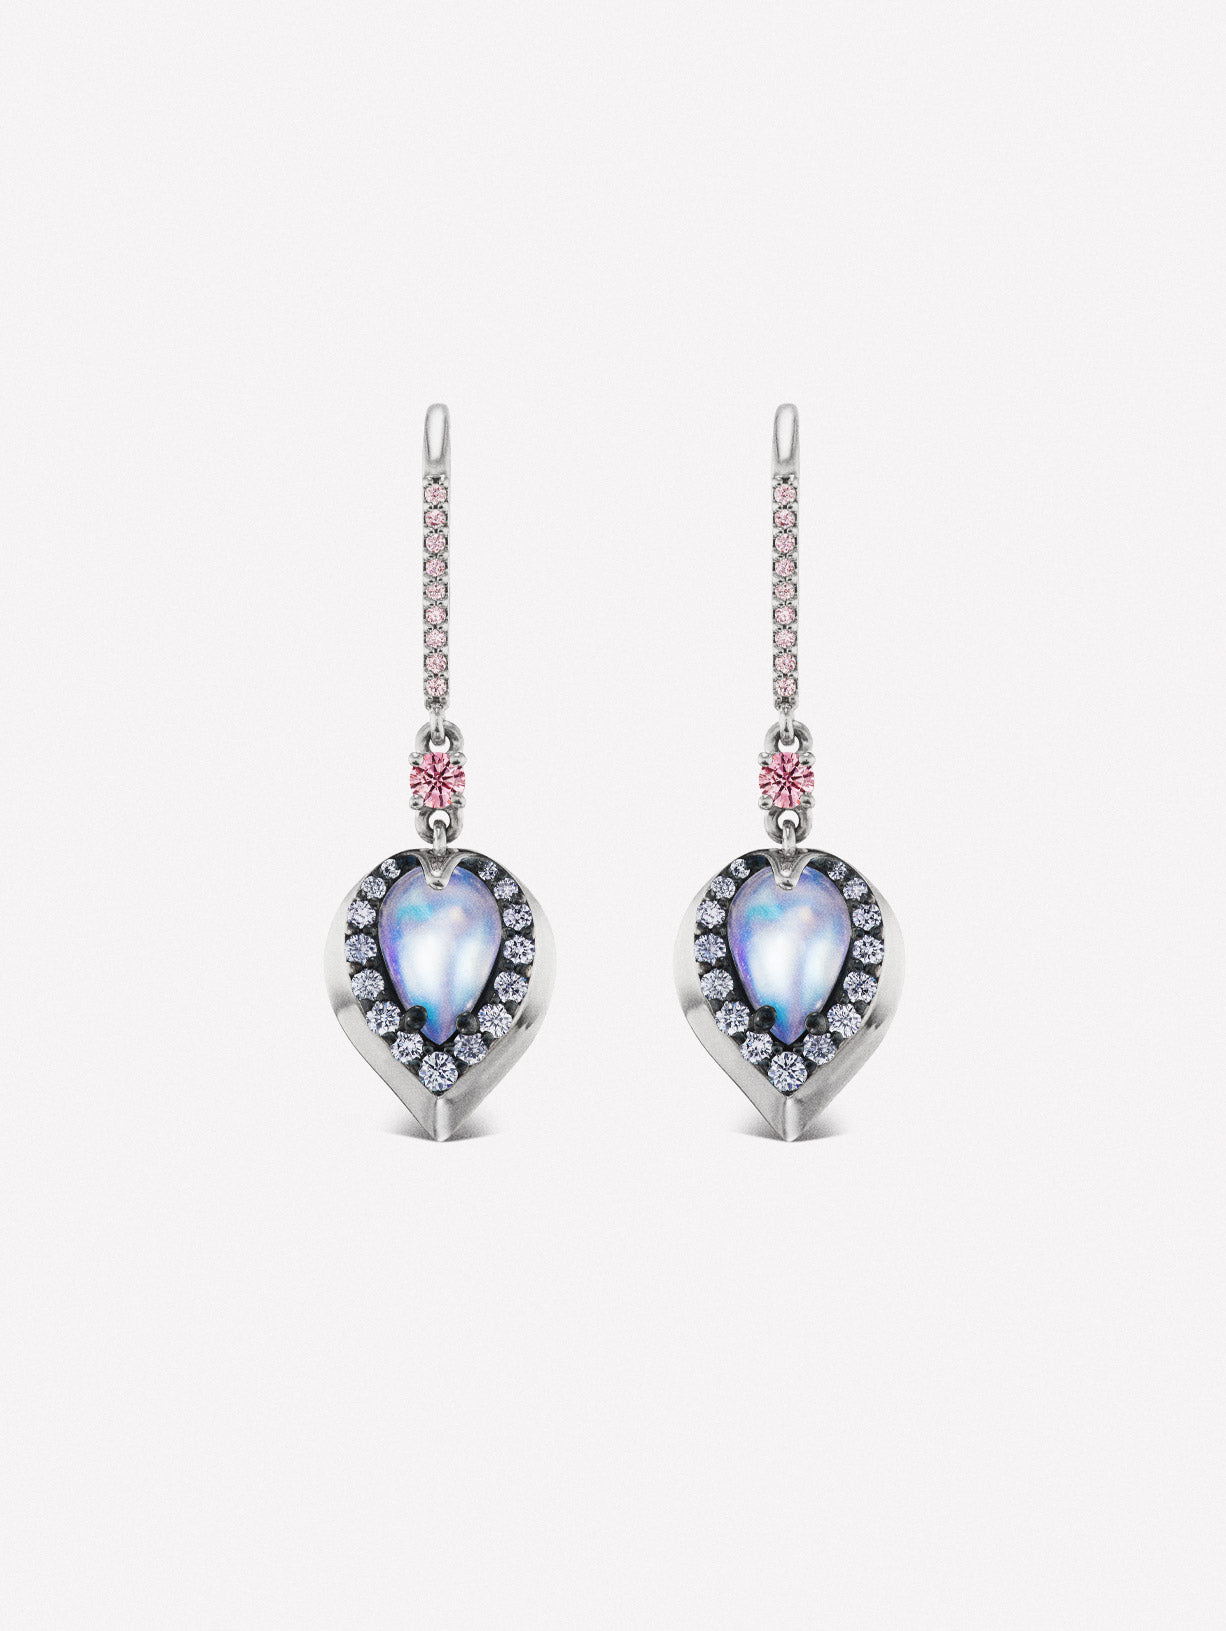 Argyle Blue Diamond and Moonstone Drop Earrings - Pink Diamonds, J FINE - J Fine, Earrings - Pink Diamond Jewelry, argyle-blue-diamond-and-moonstone-drop-earrings-by-j-fine - Argyle Pink Diam